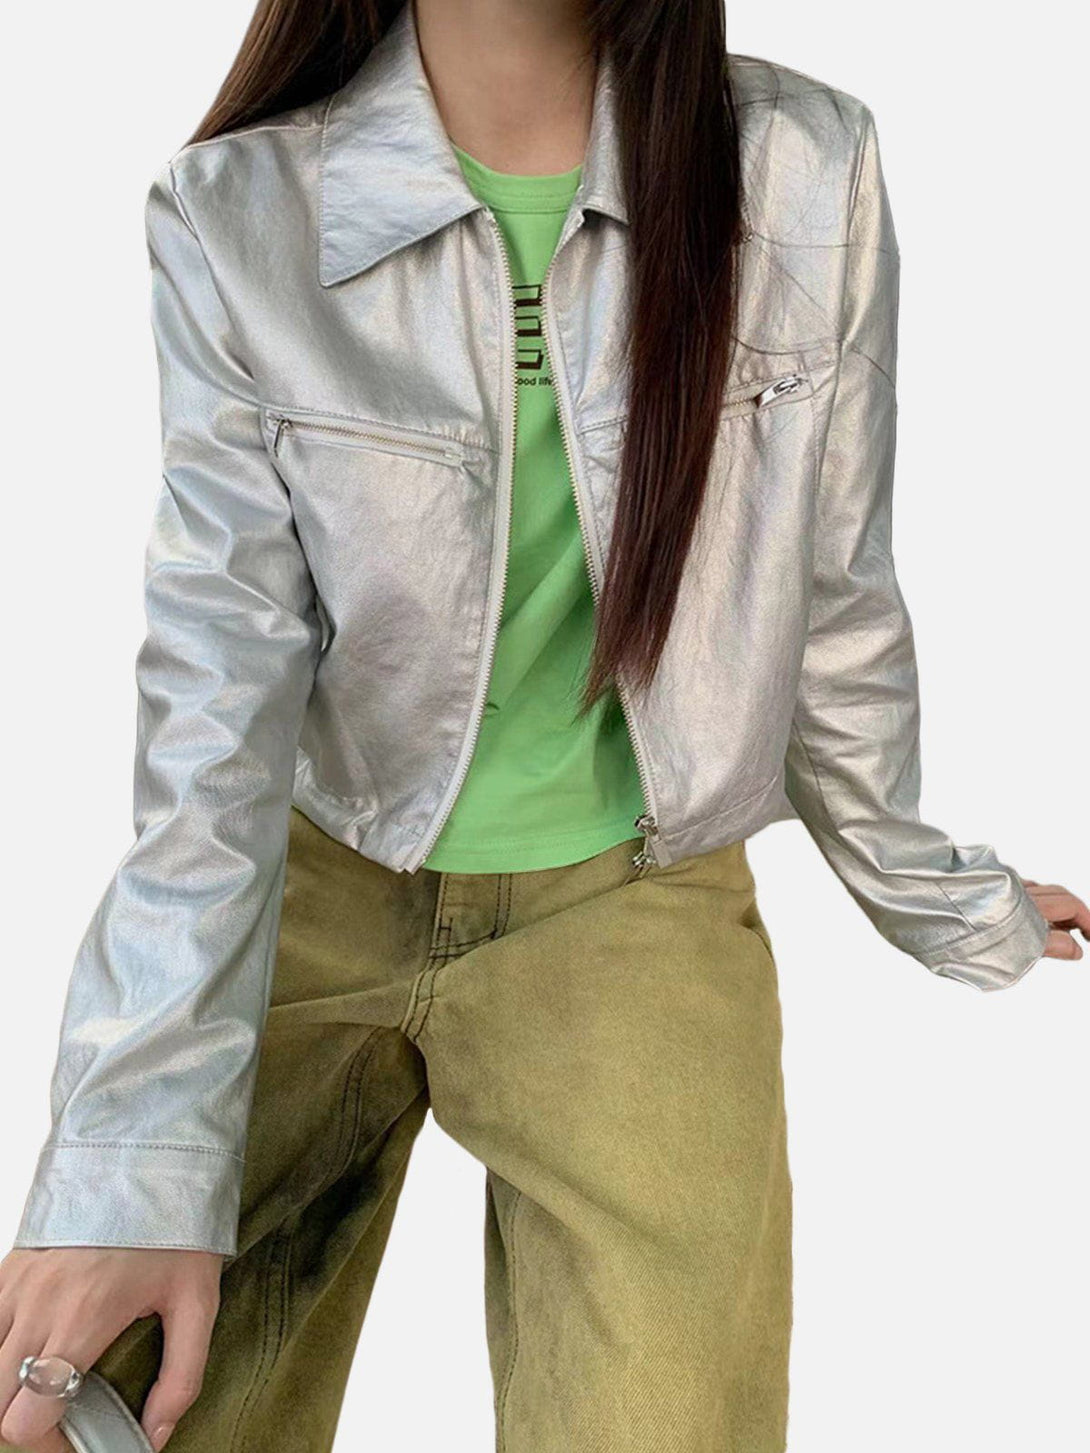 Levefly - Shiny Silver Cropped Jacket - Streetwear Fashion - levefly.com